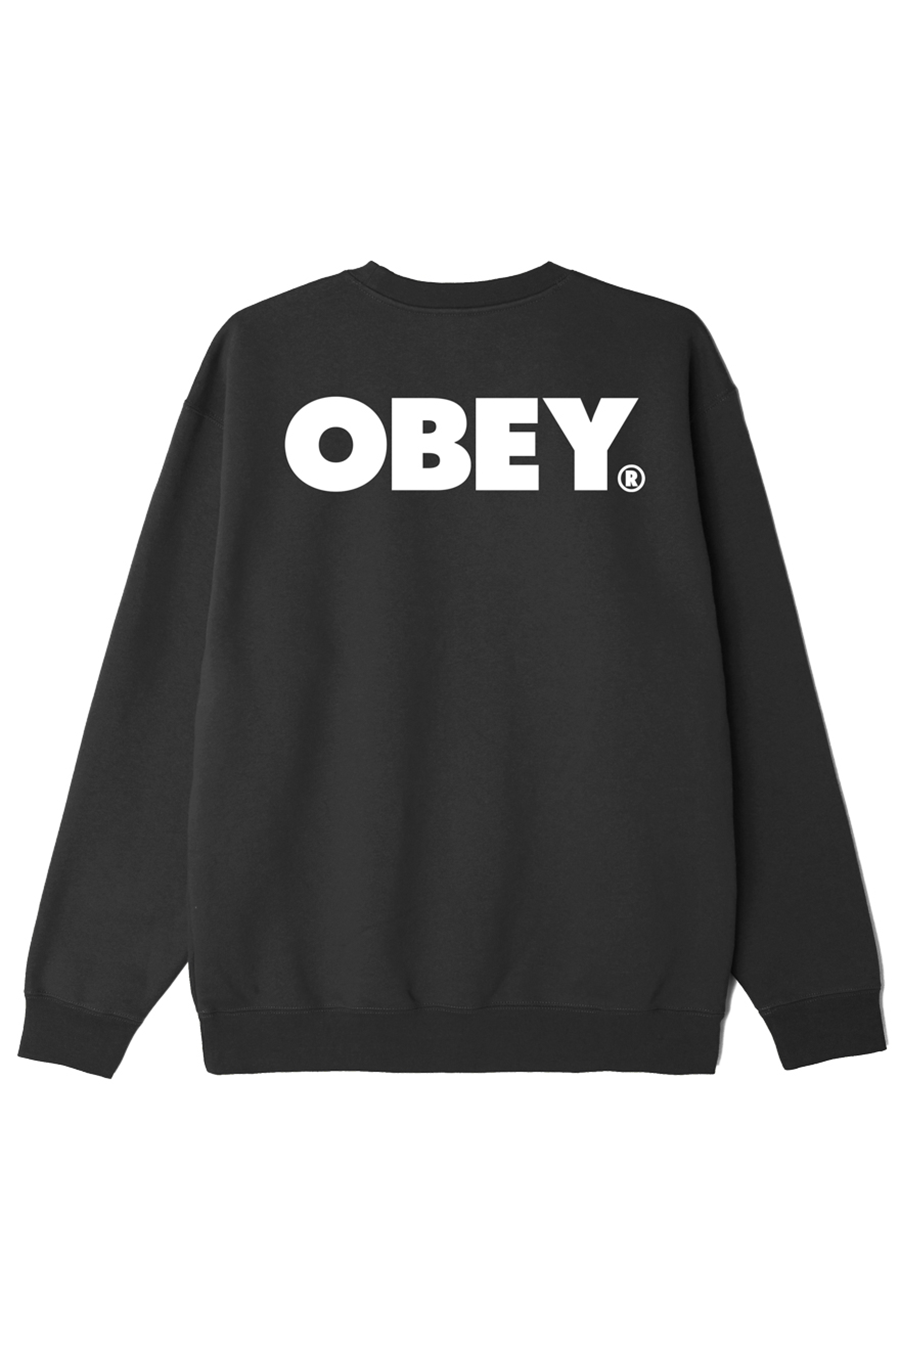 Obey Bold Sweatshirt | Black - Main Image Number 2 of 2